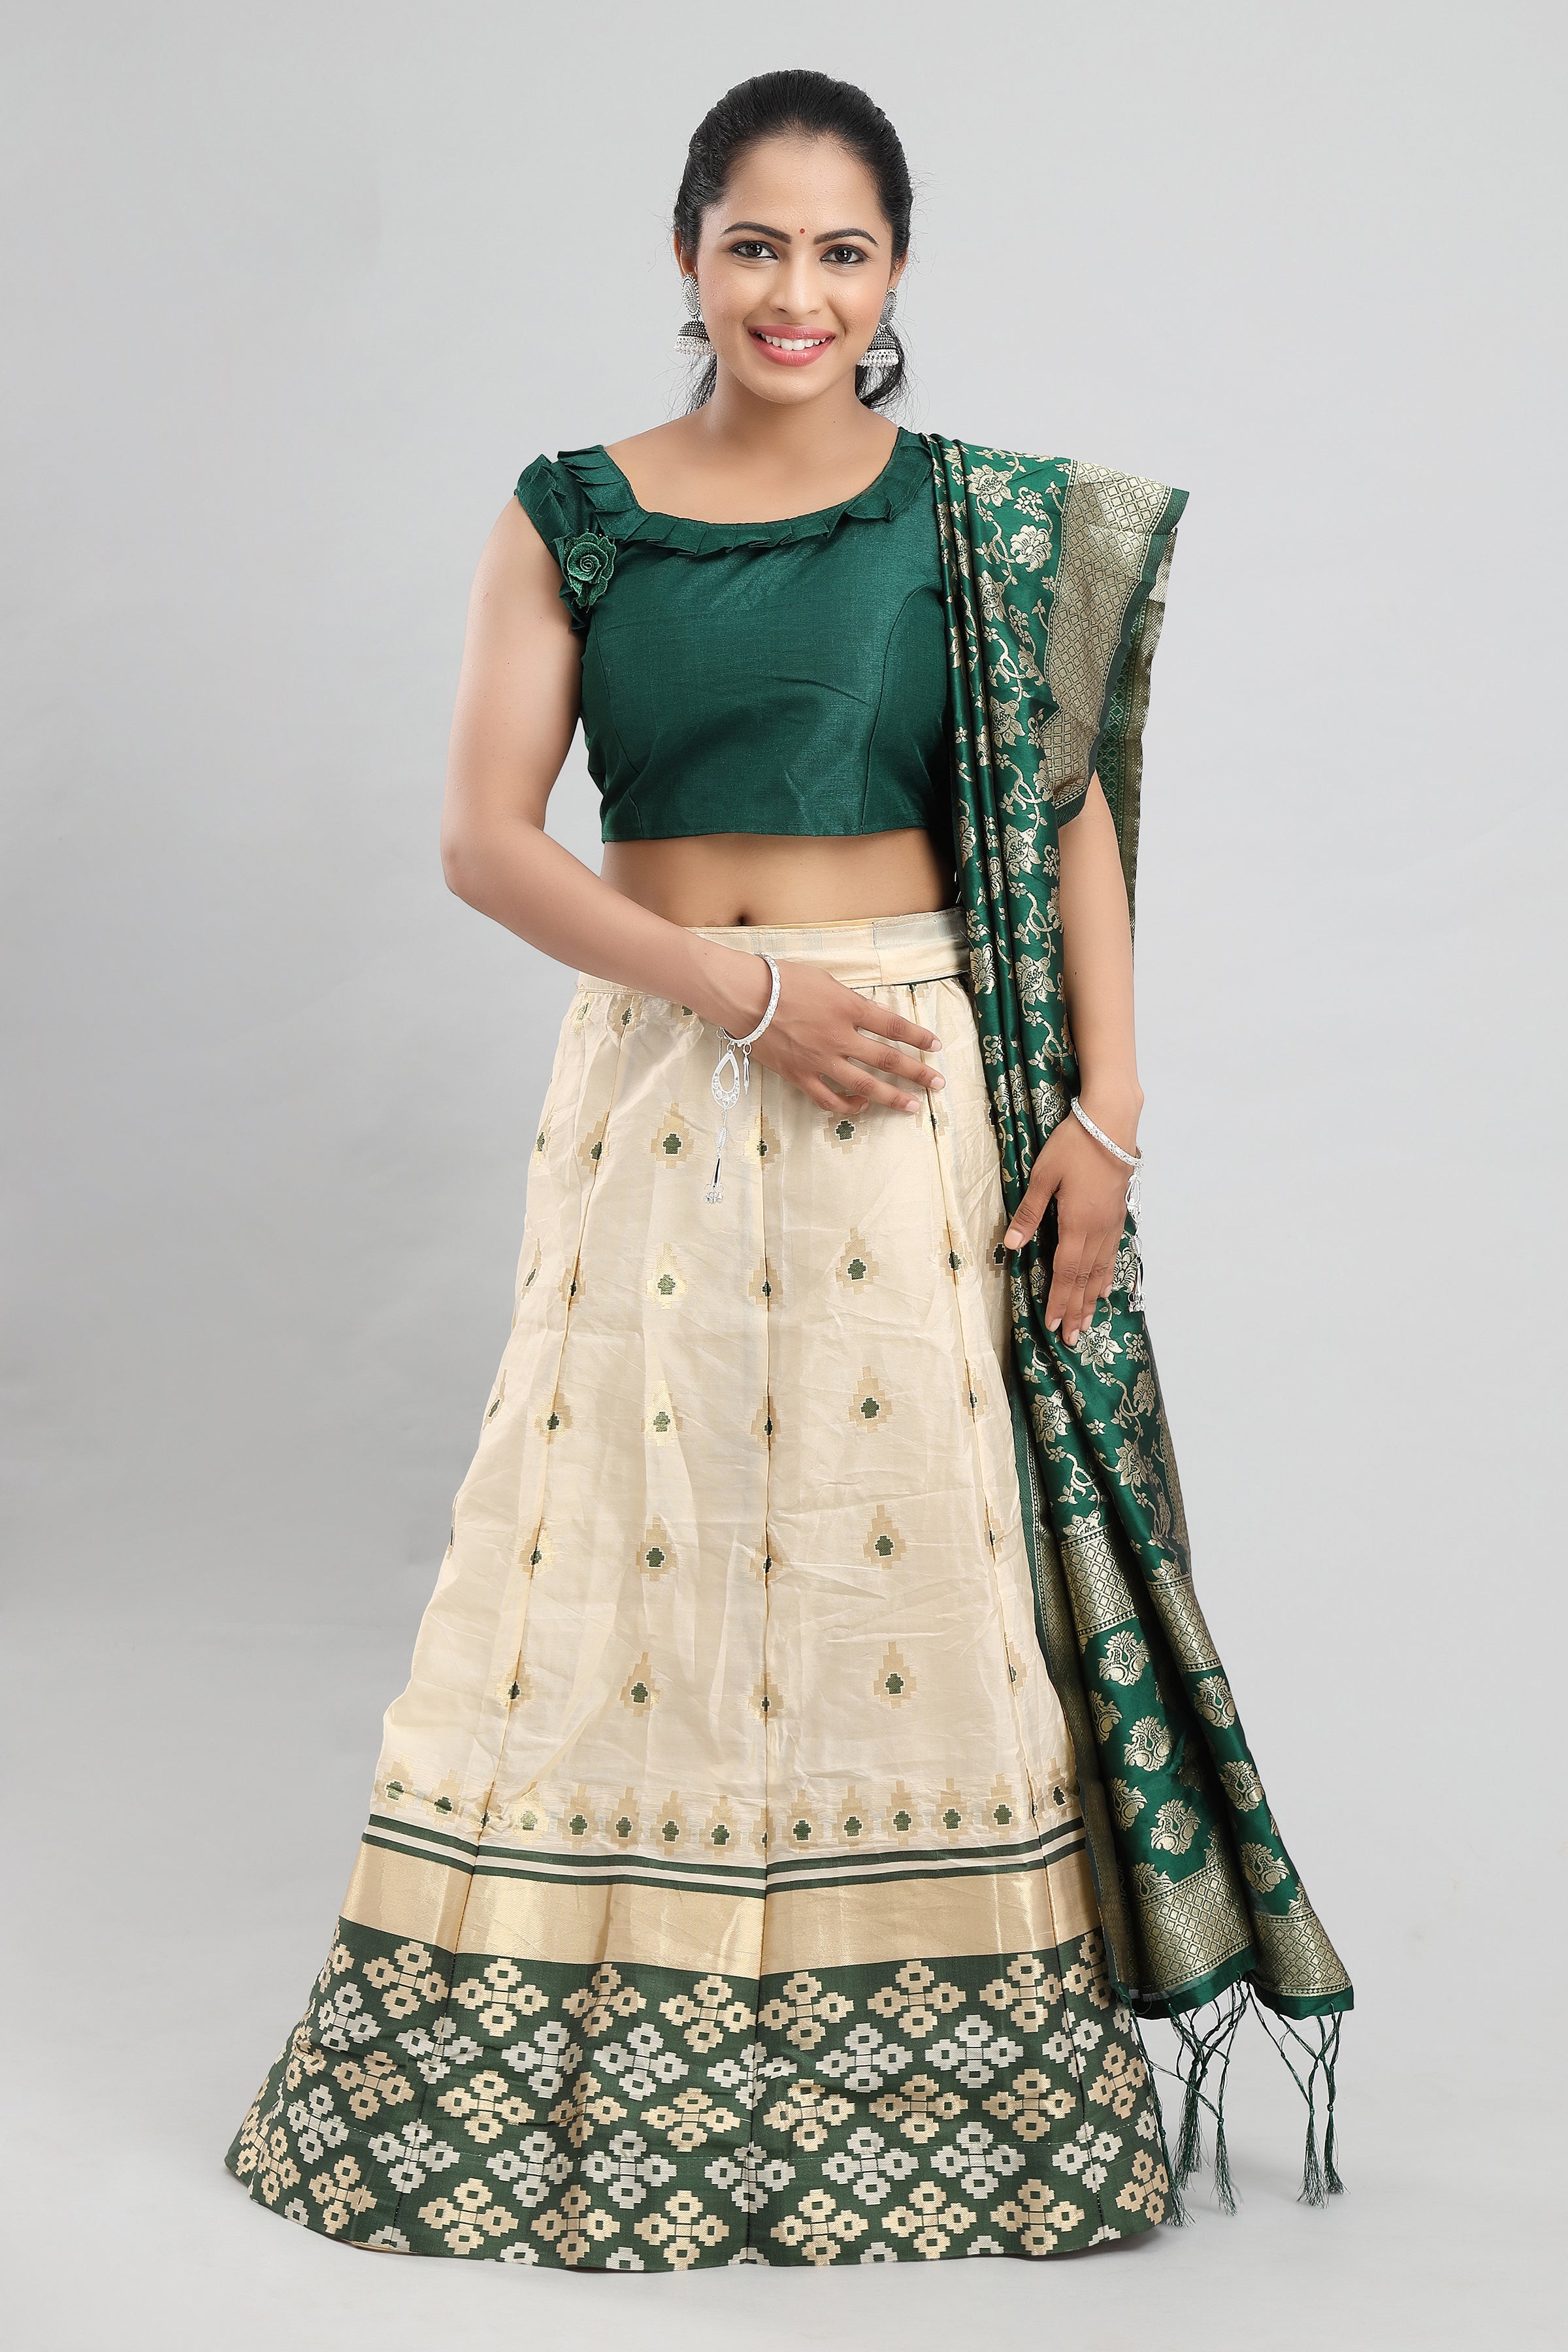 Women's Banarasi  White And Green Brocade Lehenga With Ready Made Blouse, Brocade Dupatta, Cane And Lining. - MANOHARA